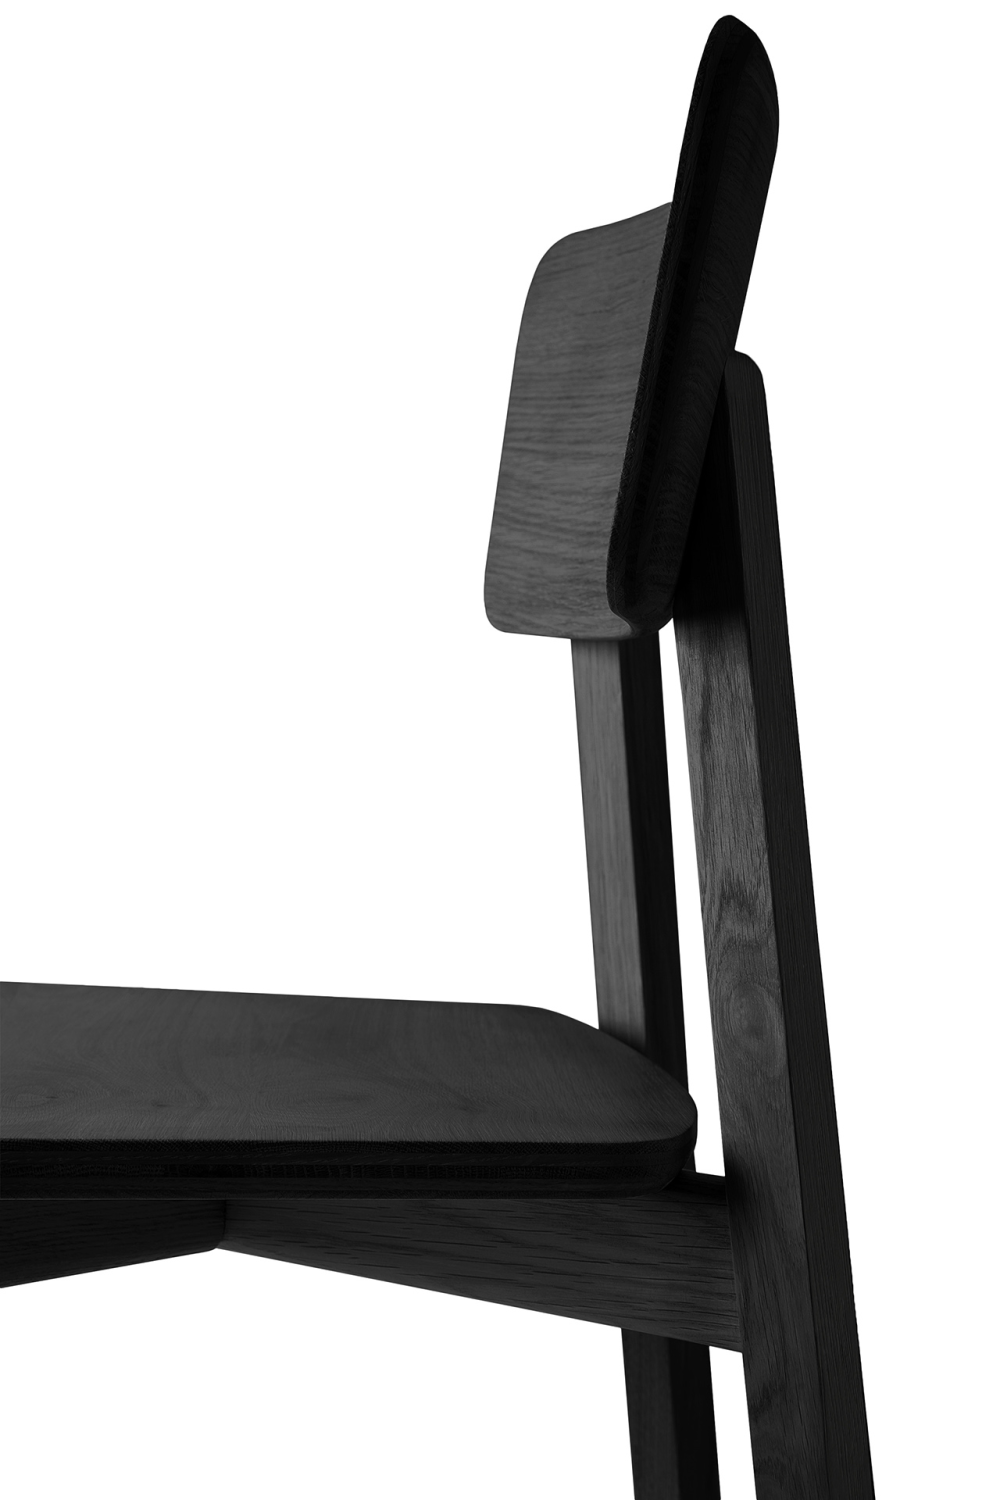 Varnished Oak Minimalist Dining Chair | Ethnicraft Casale | Oroa.com